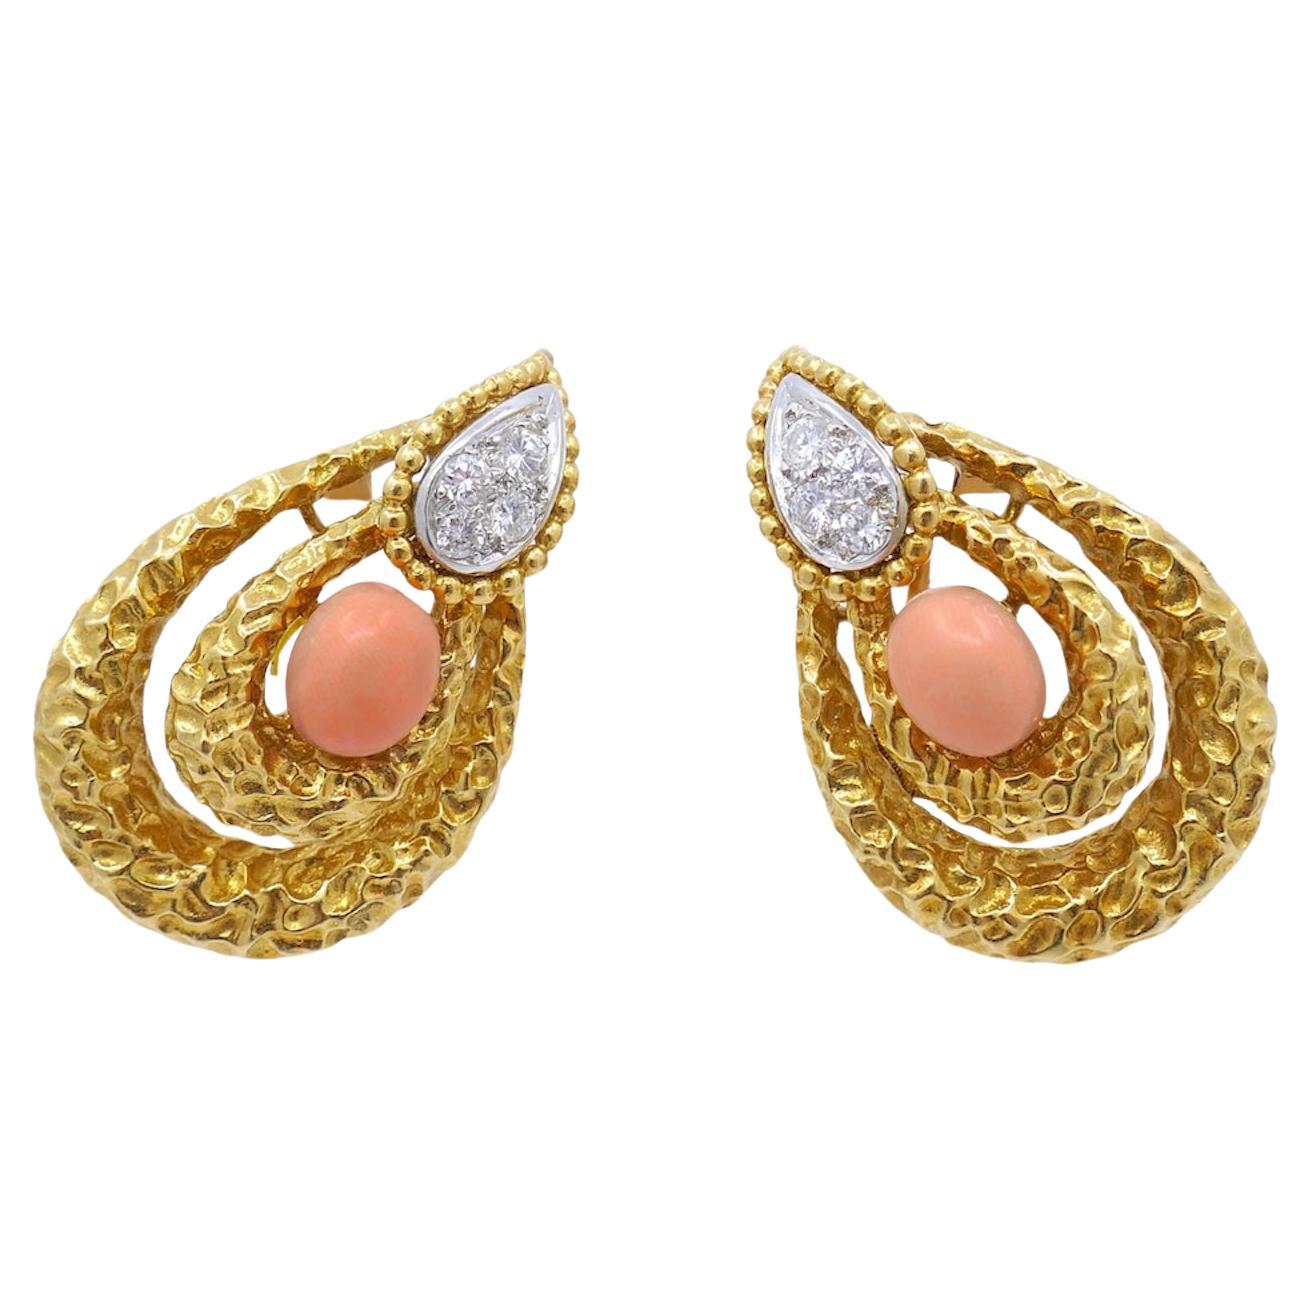 Mauboussin Paris 18k Hammered Gold Diamond Coral Earrings